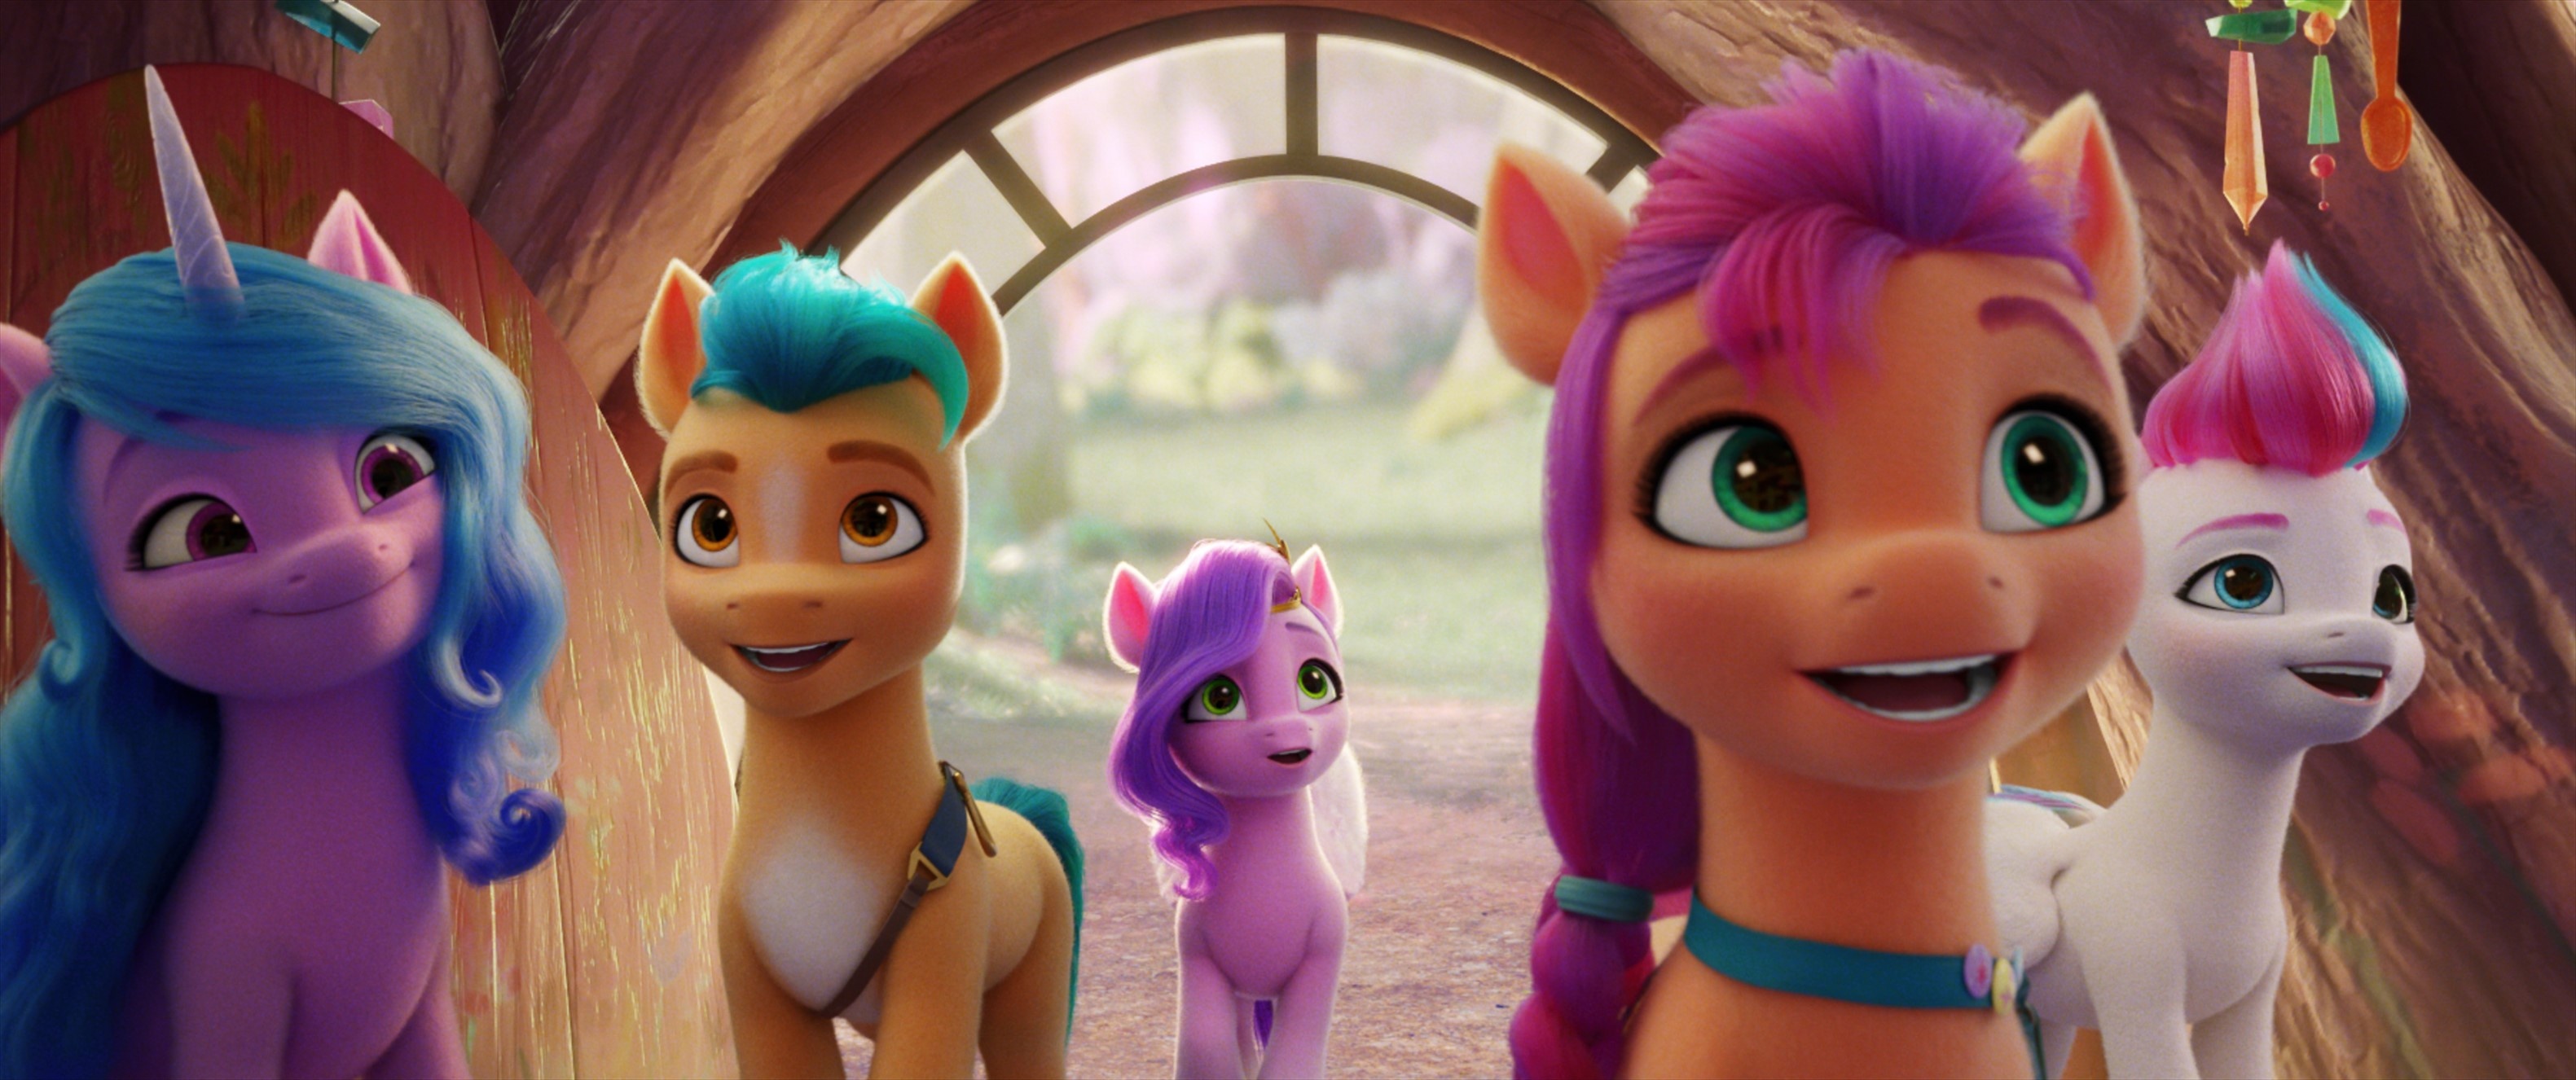 My Little Pony: A New Generation, Screencap, Official spoiler, 3170x1330 Dual Screen Desktop